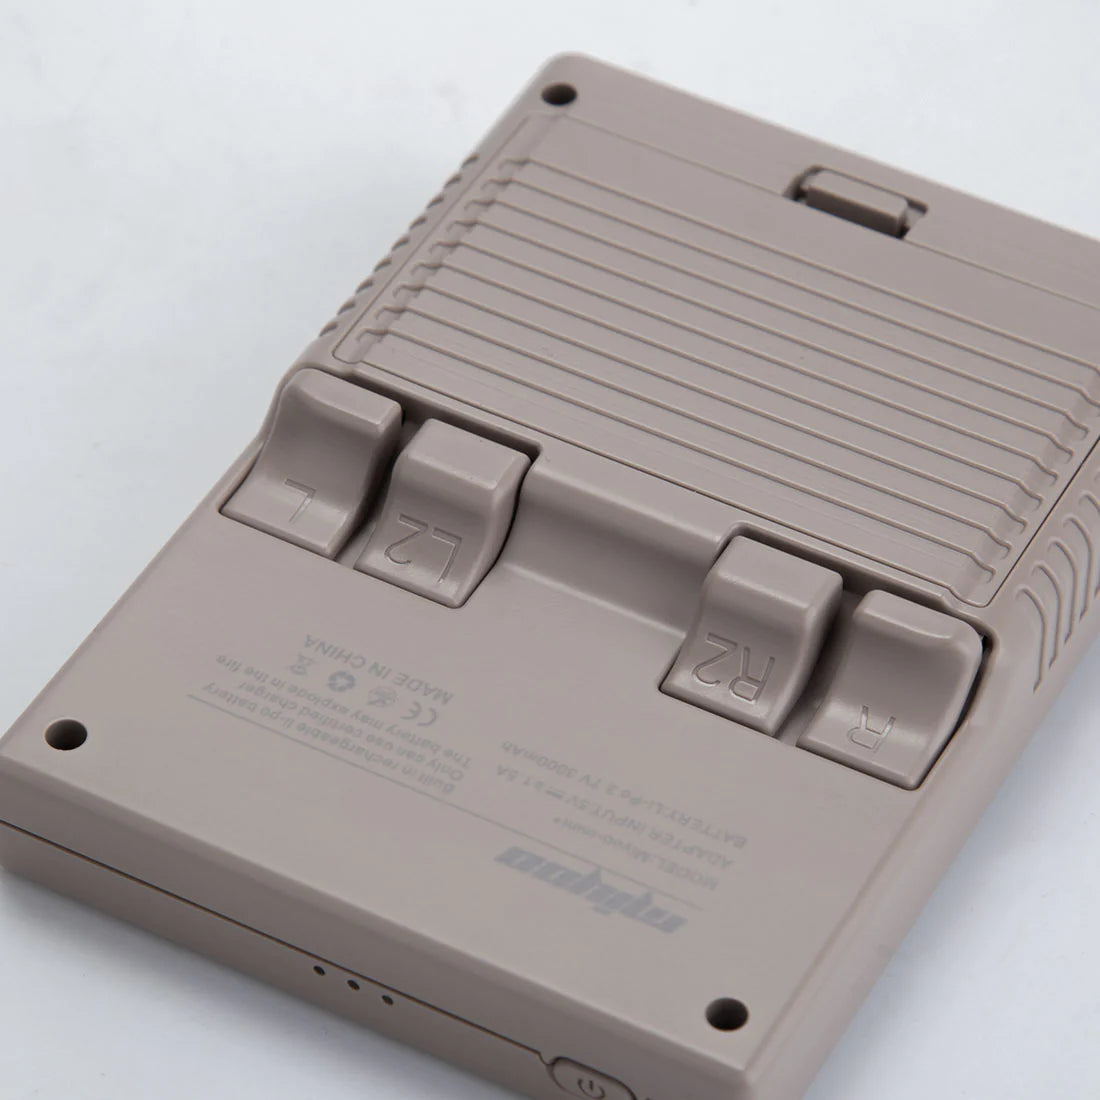 litnxt-miyoo-mini-plus-retro-handheld-game-console-grey-1